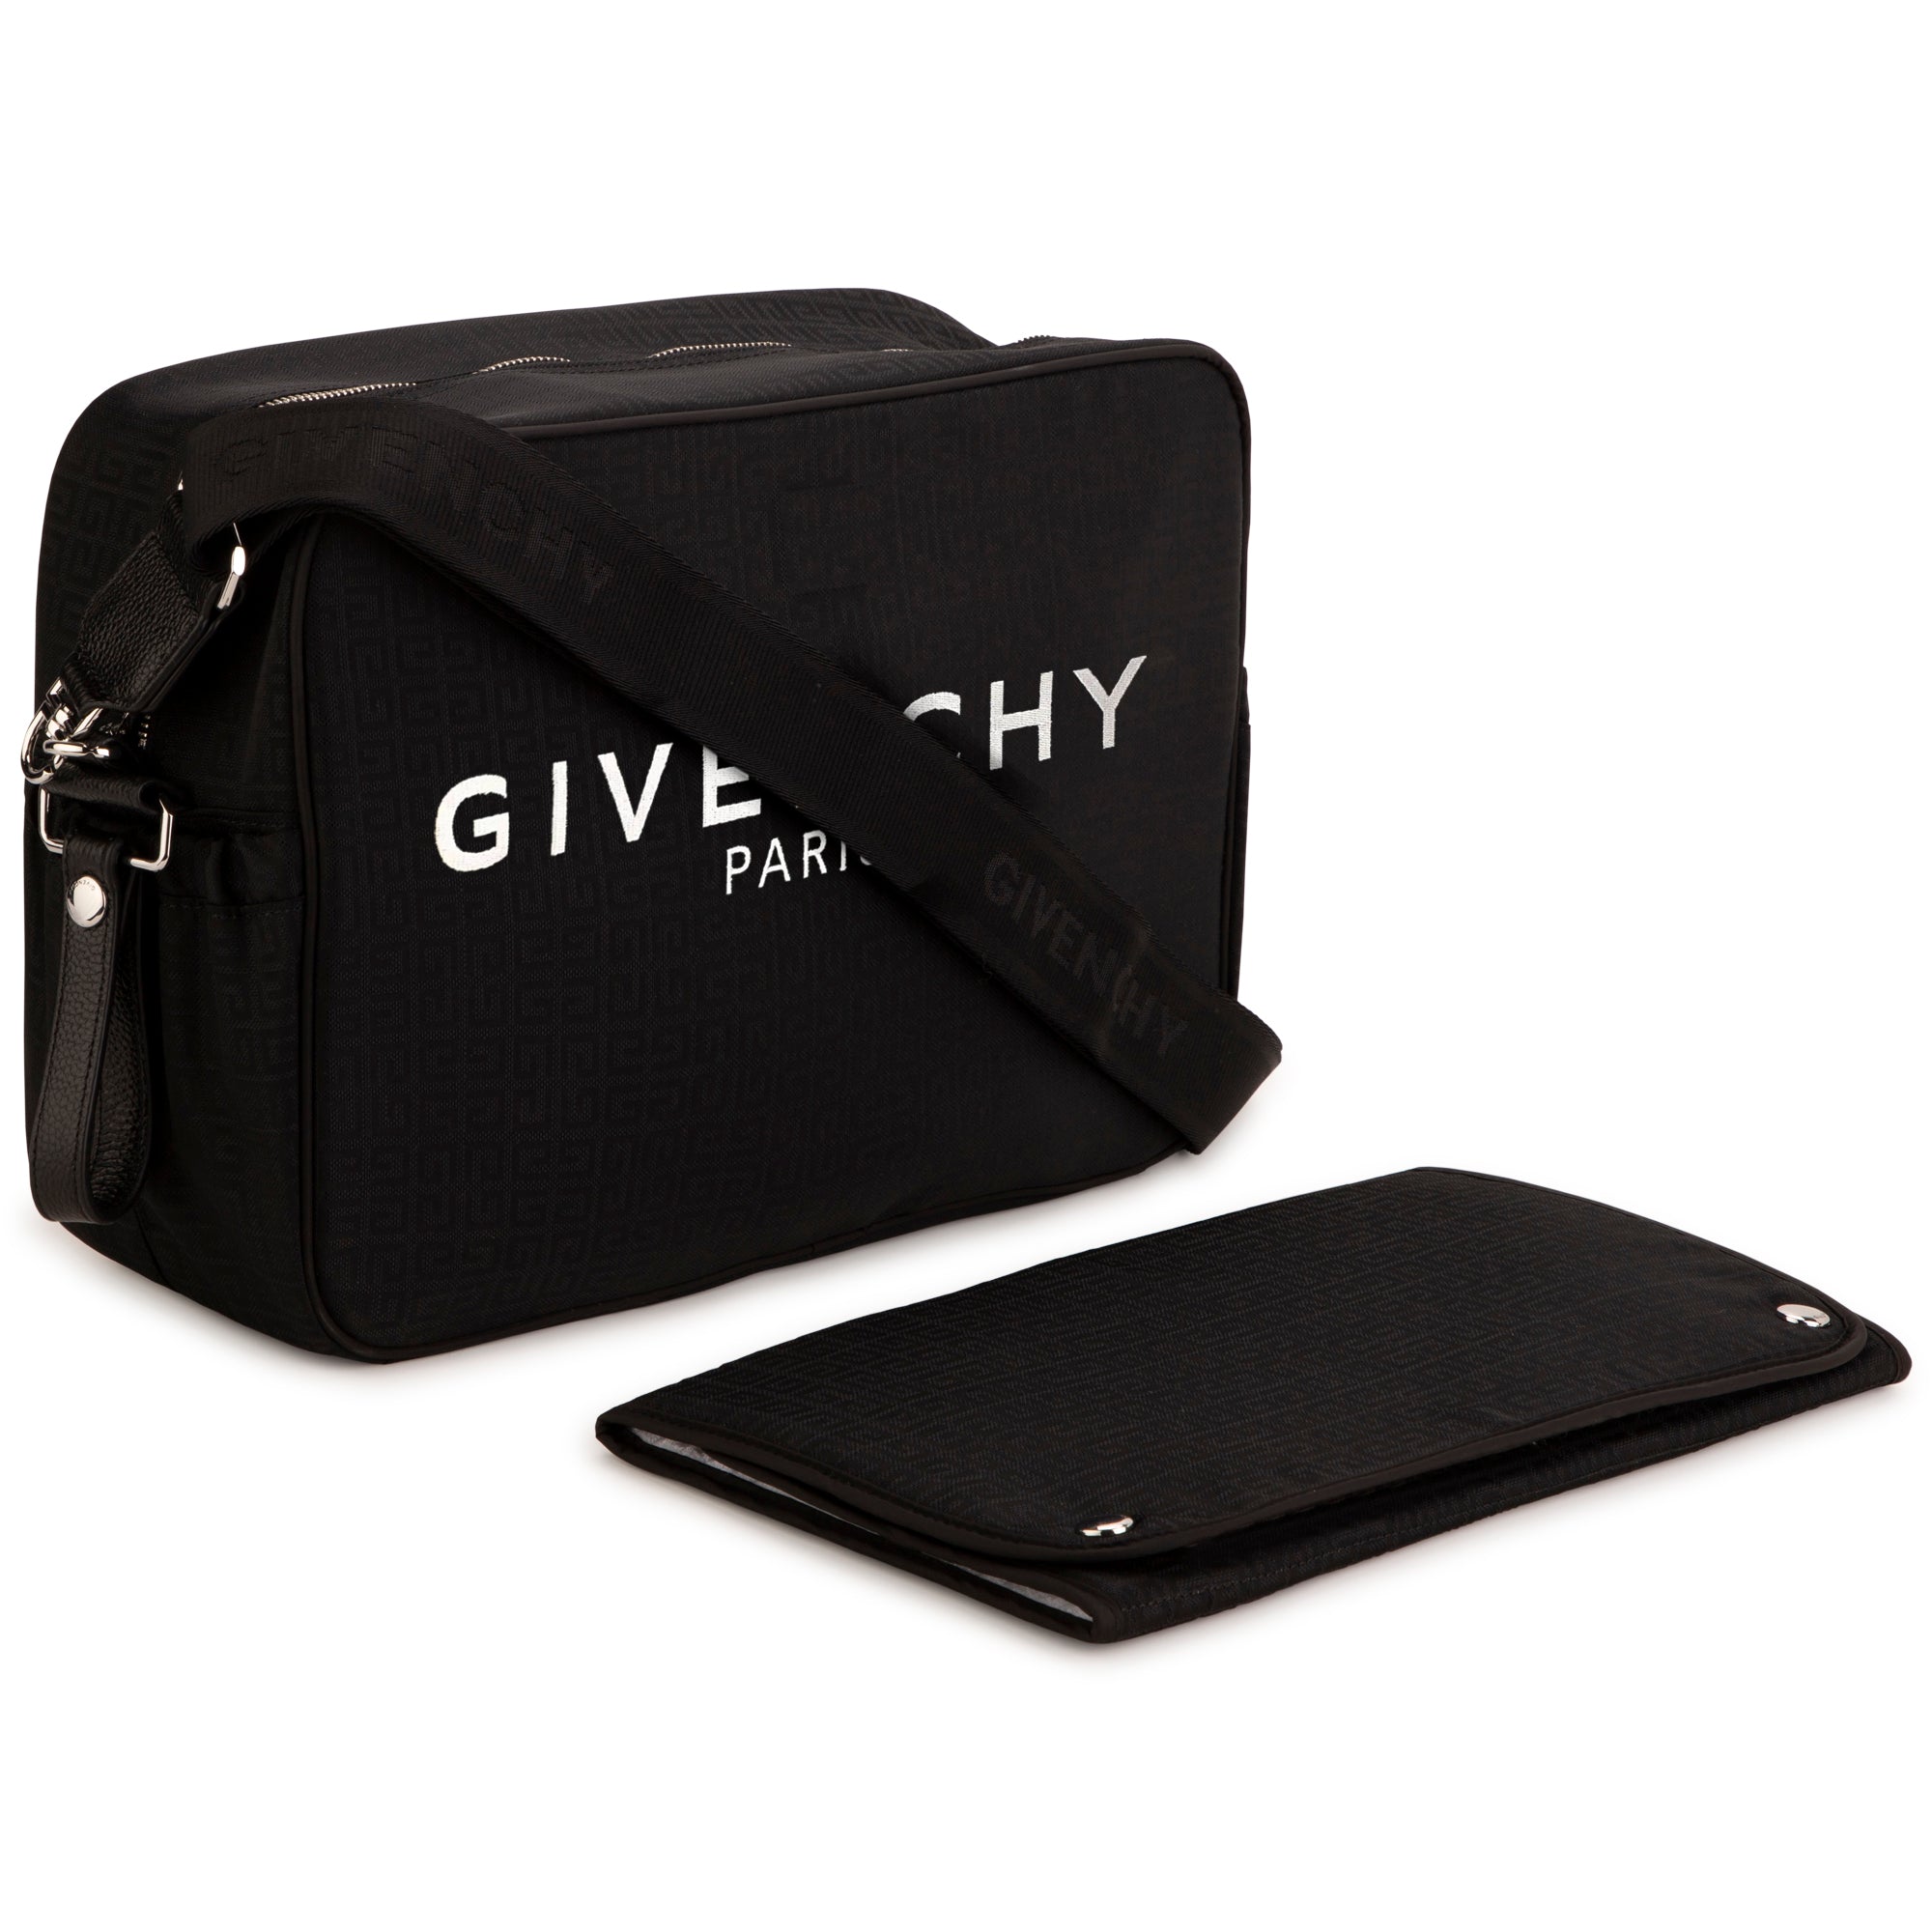 Givenchy Black Diaper Bag